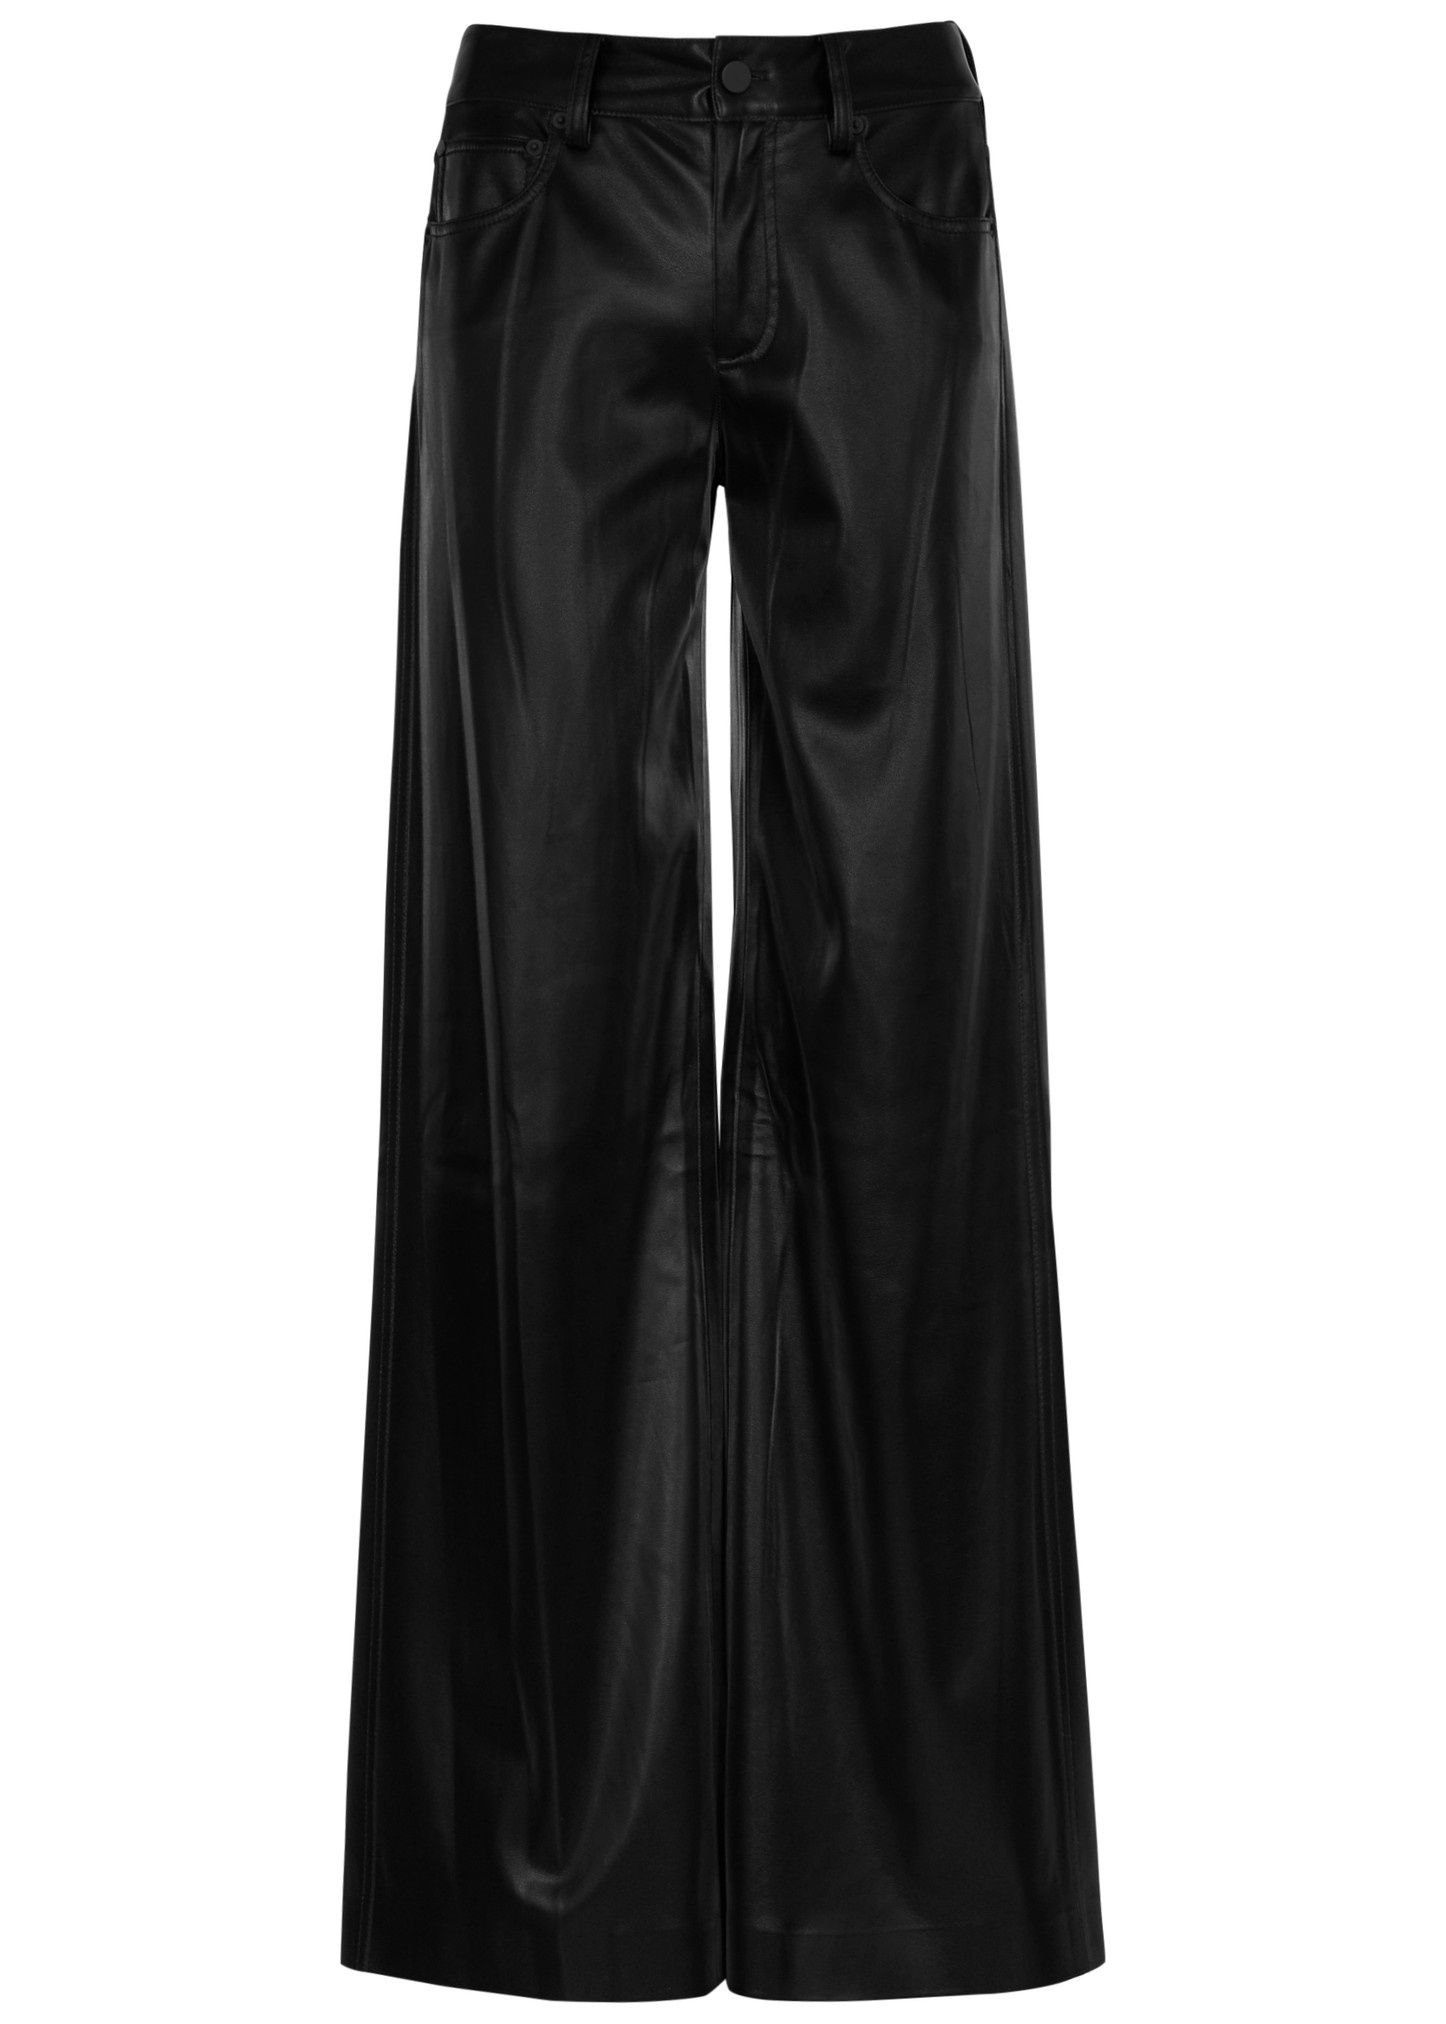 Trish vegan leather trousers - 1